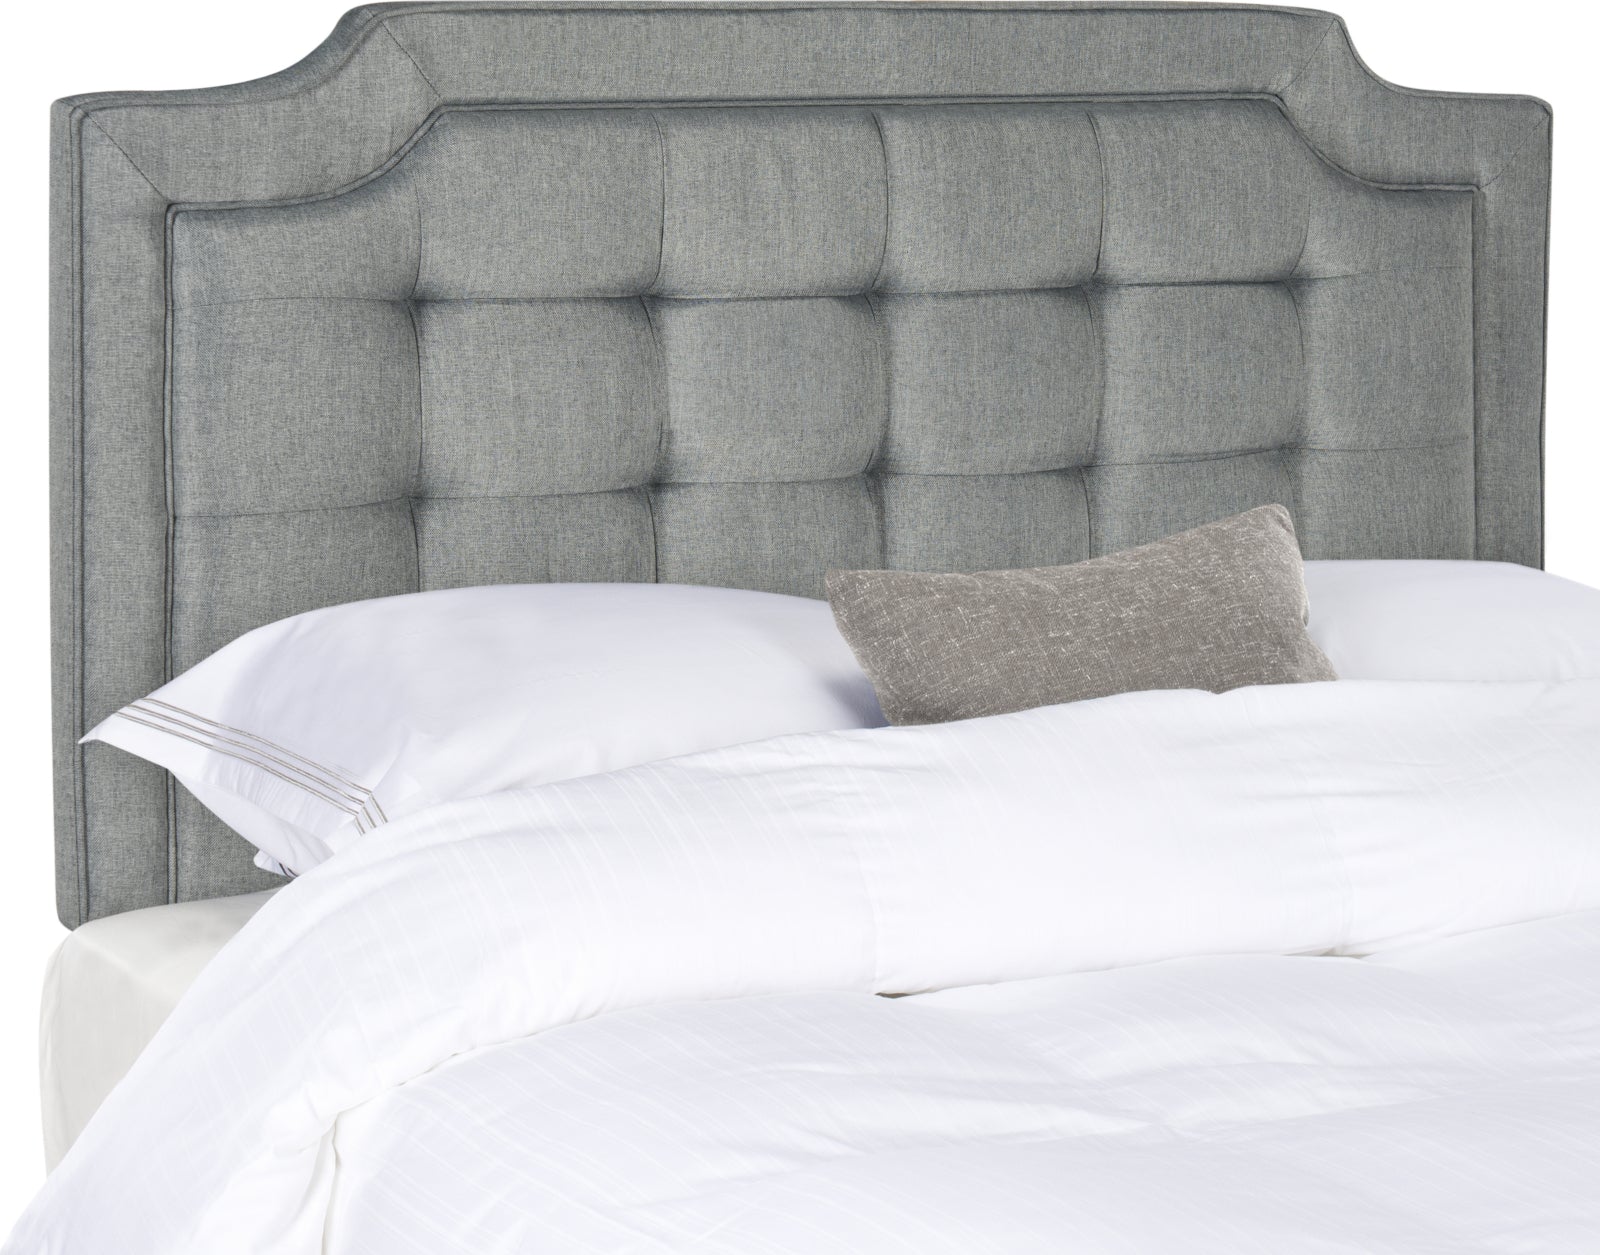 Safavieh Sapphire Tufted Linen Headboard Grey Bedding main image